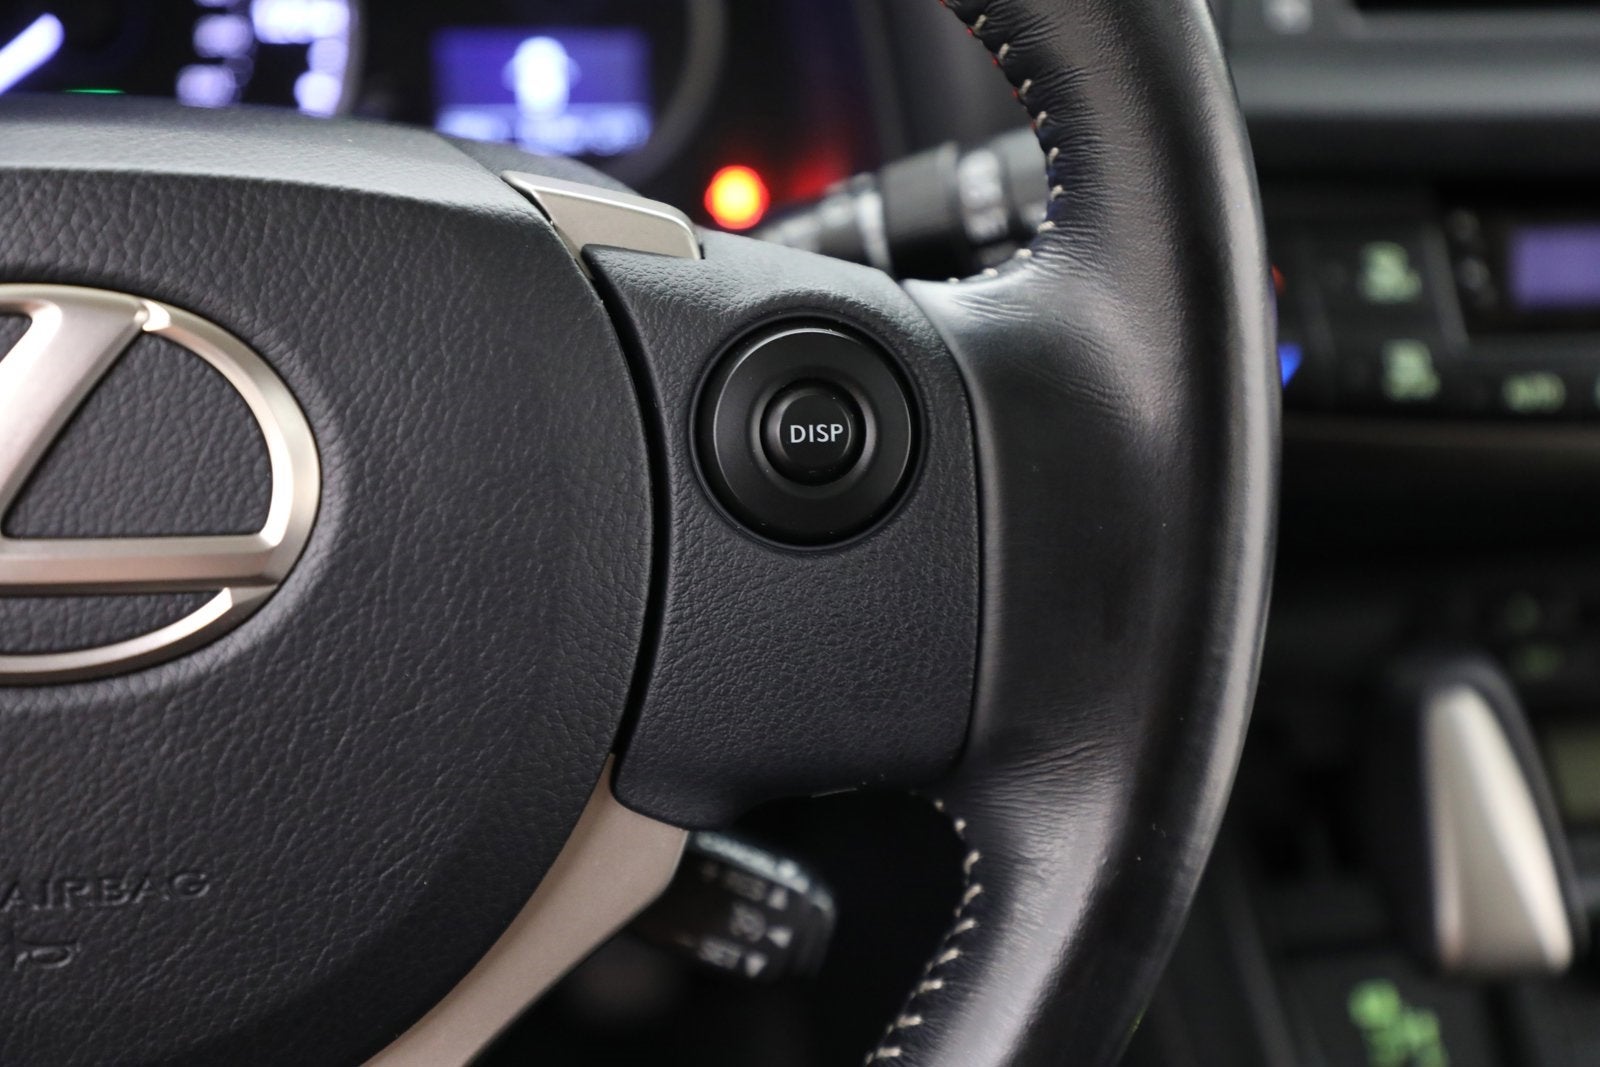 2017 Lexus CT 200h Power Sunroof Heated Black Leather Seats Hybrid HD Backup Camera Cruise Dual Zone AC Bluetooth